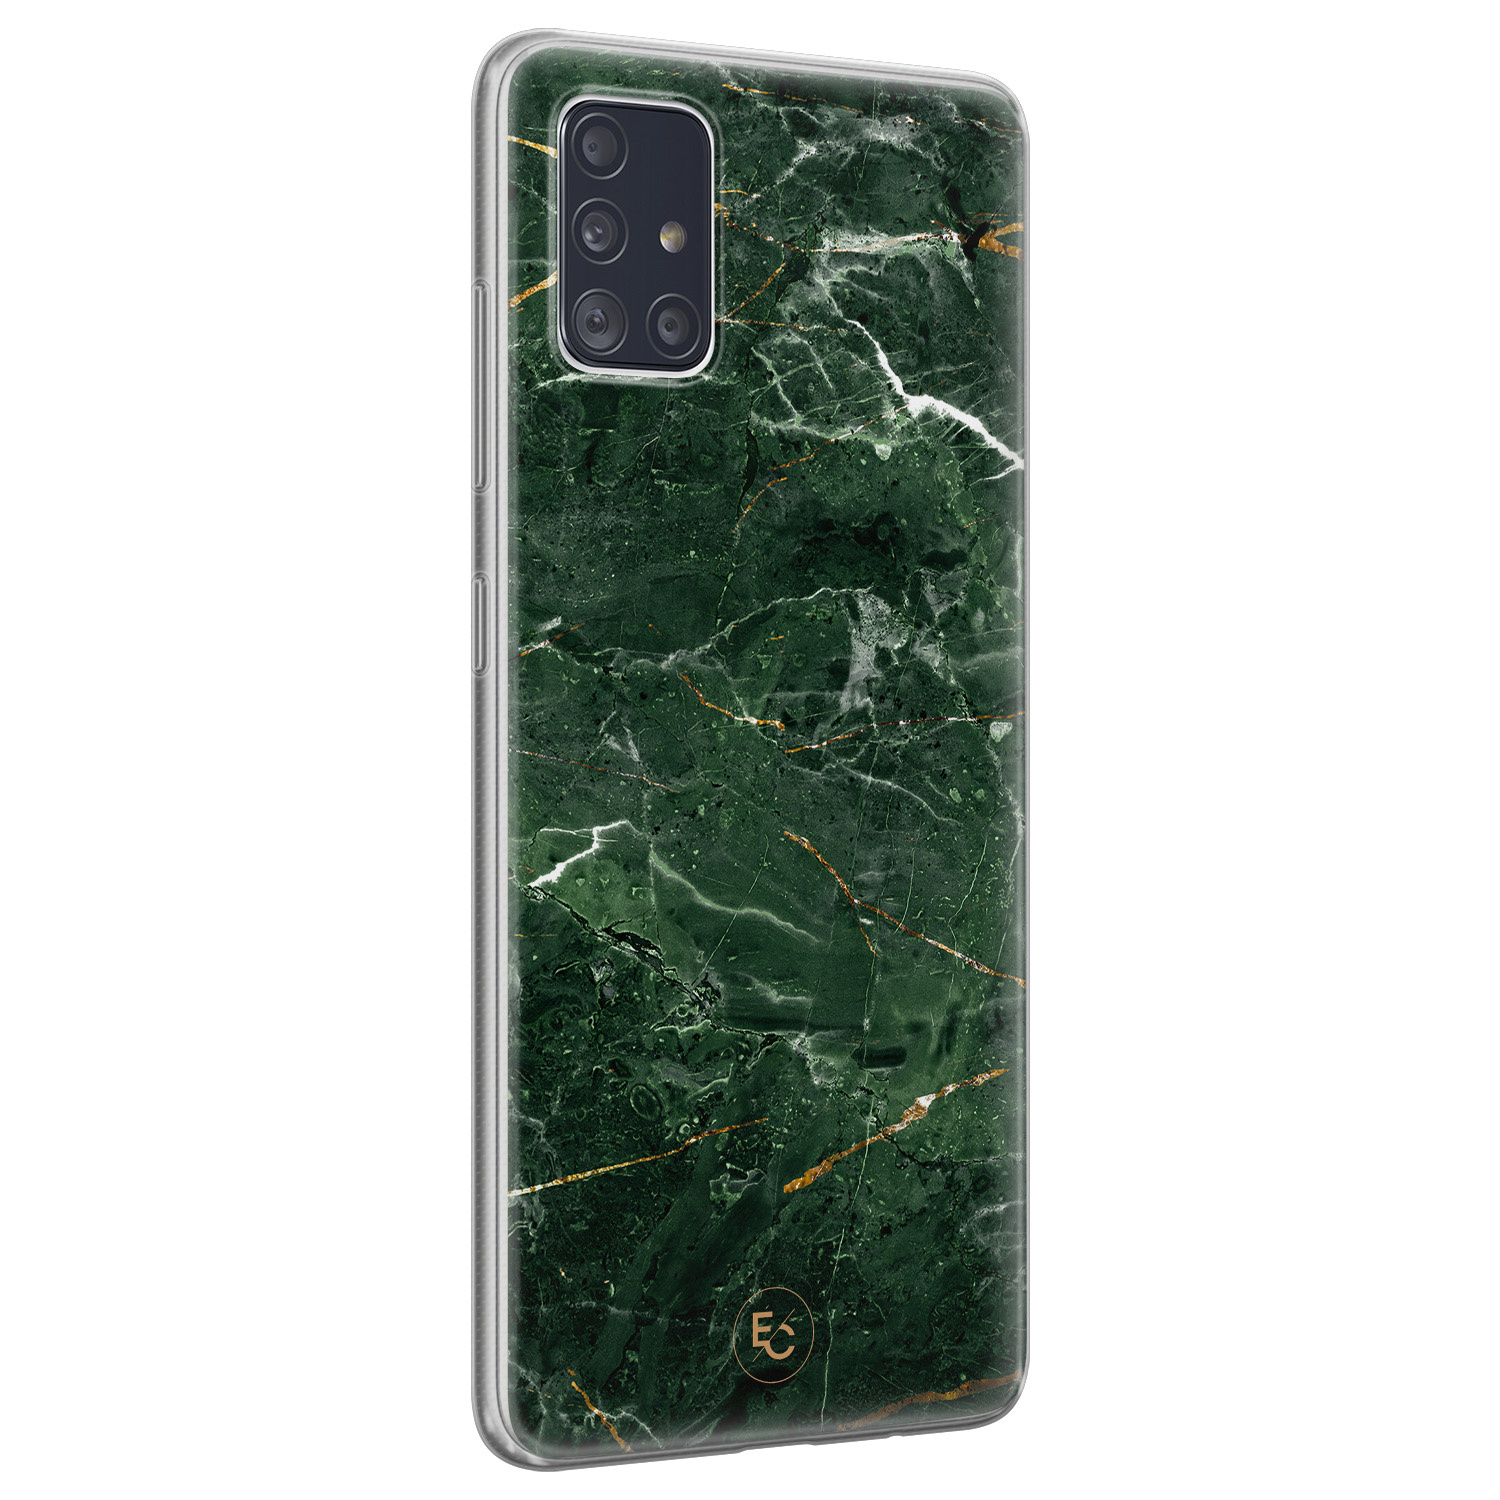 ELLECHIQ Samsung Galaxy A51 siliconen hoesje - Marble jade green